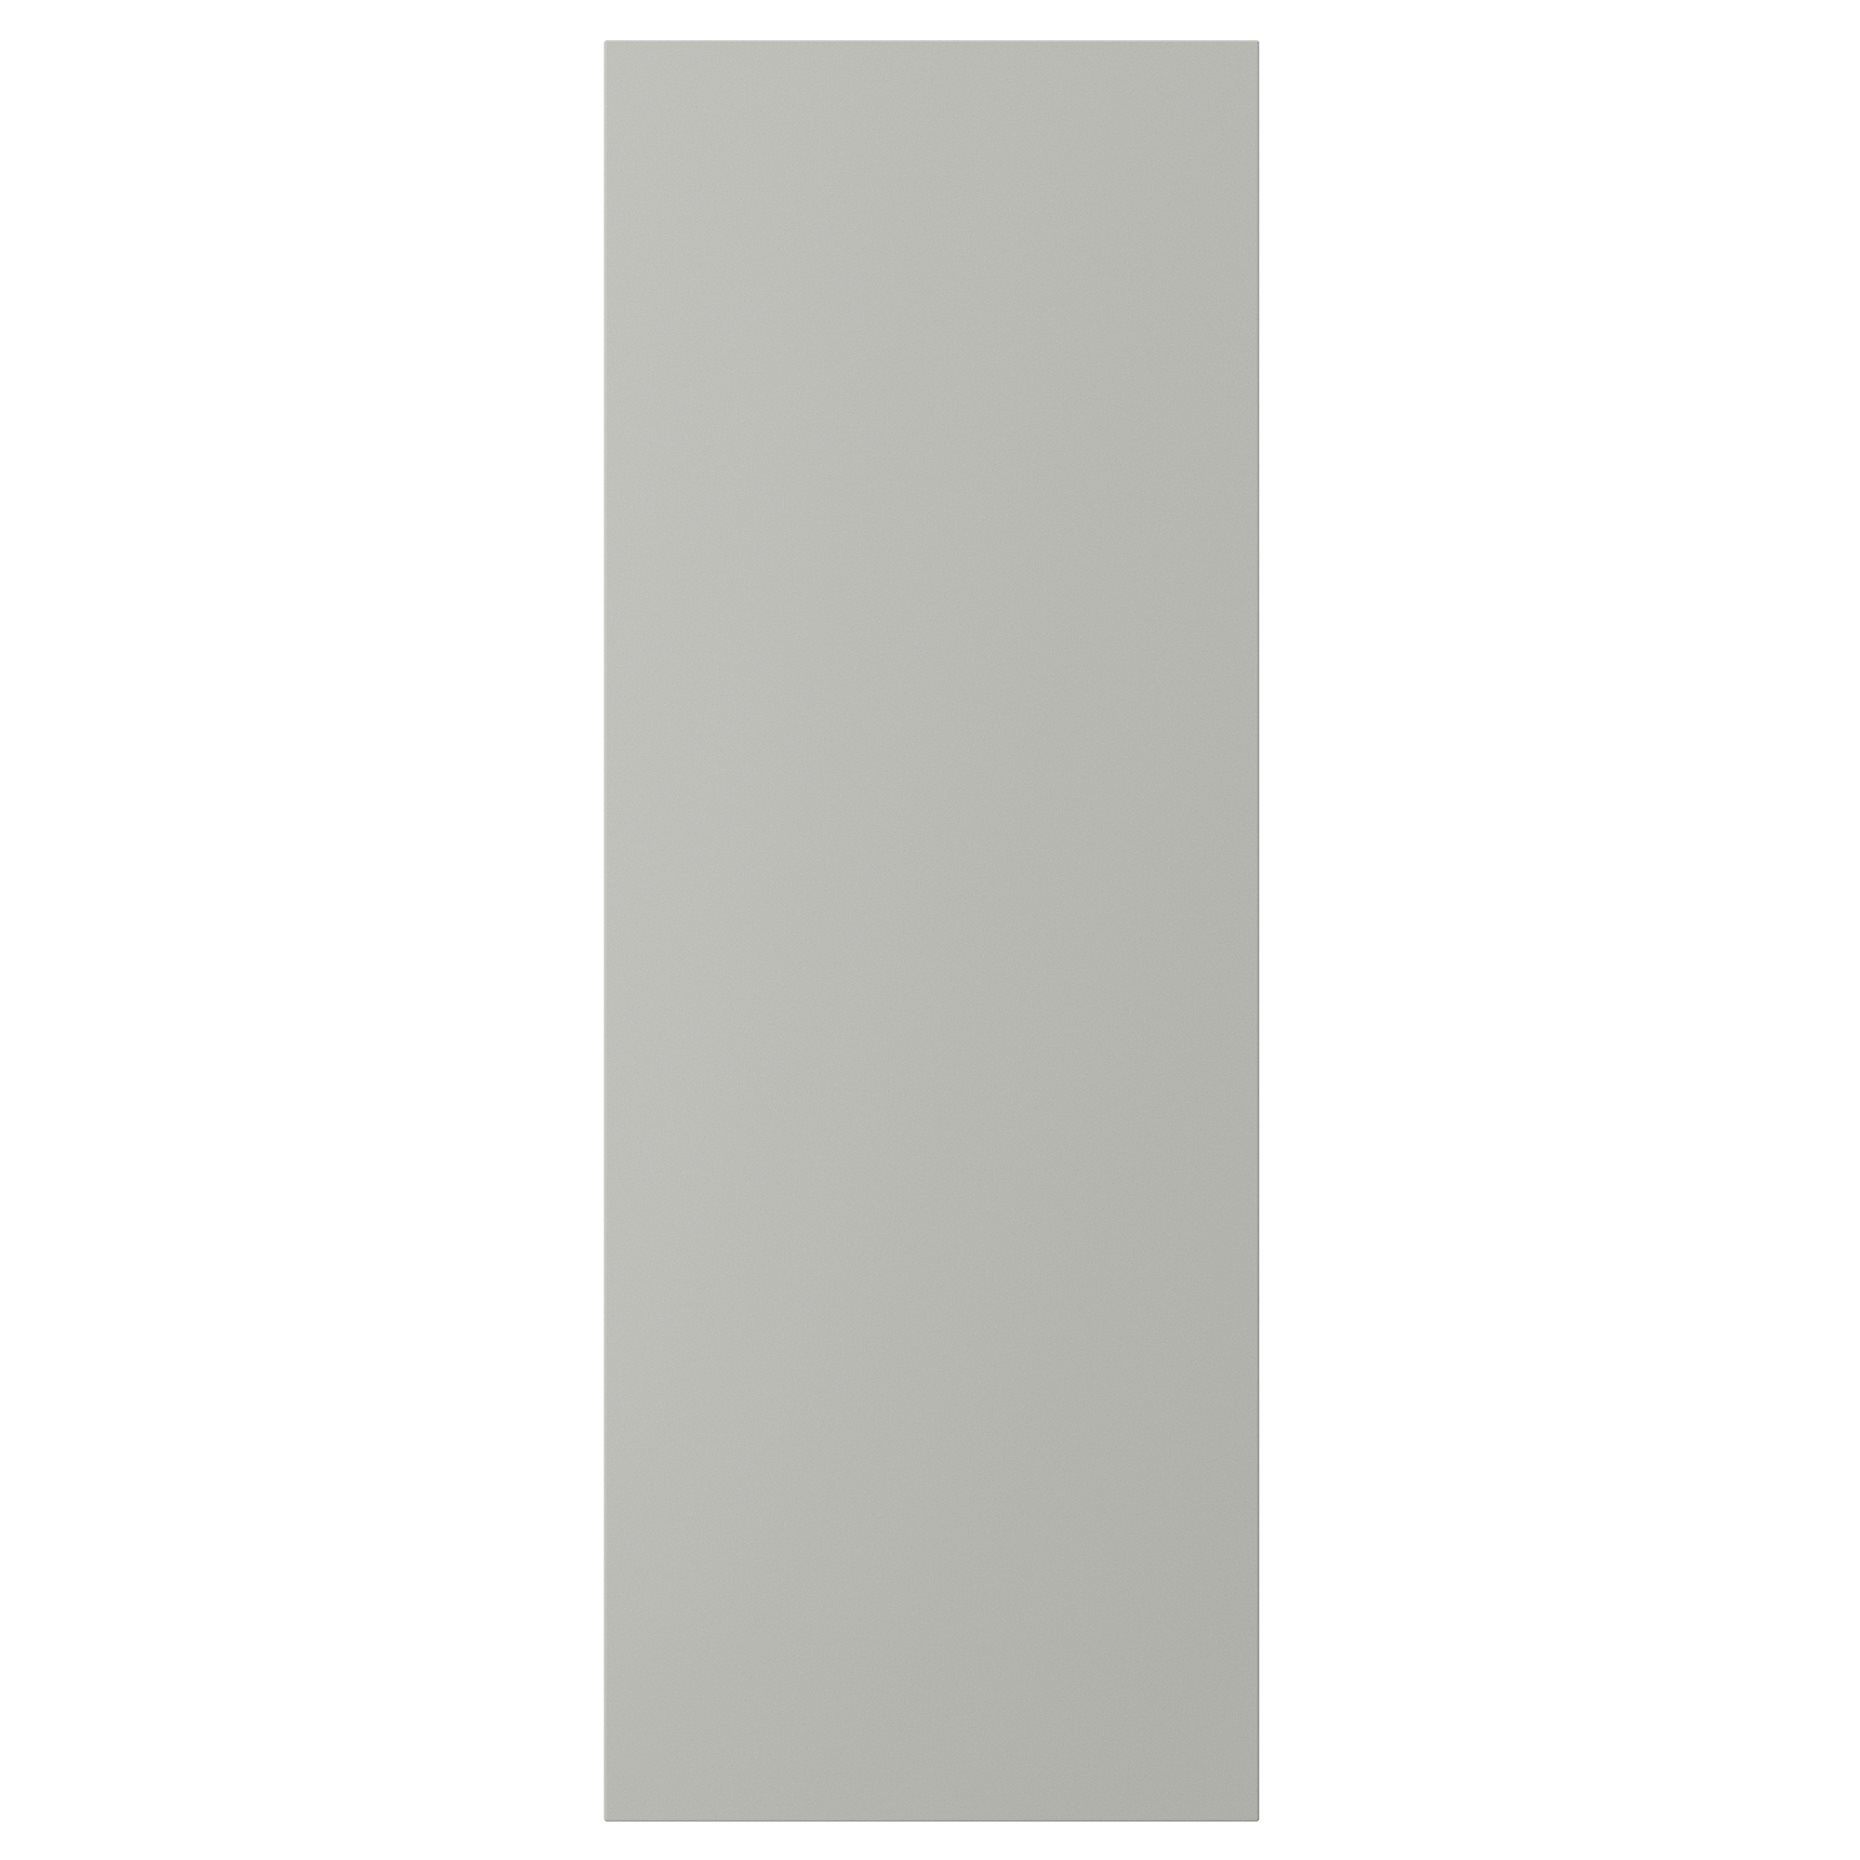 HAVSTORP, πλαϊνή επιφάνεια, 39x106 cm, 205.684.64